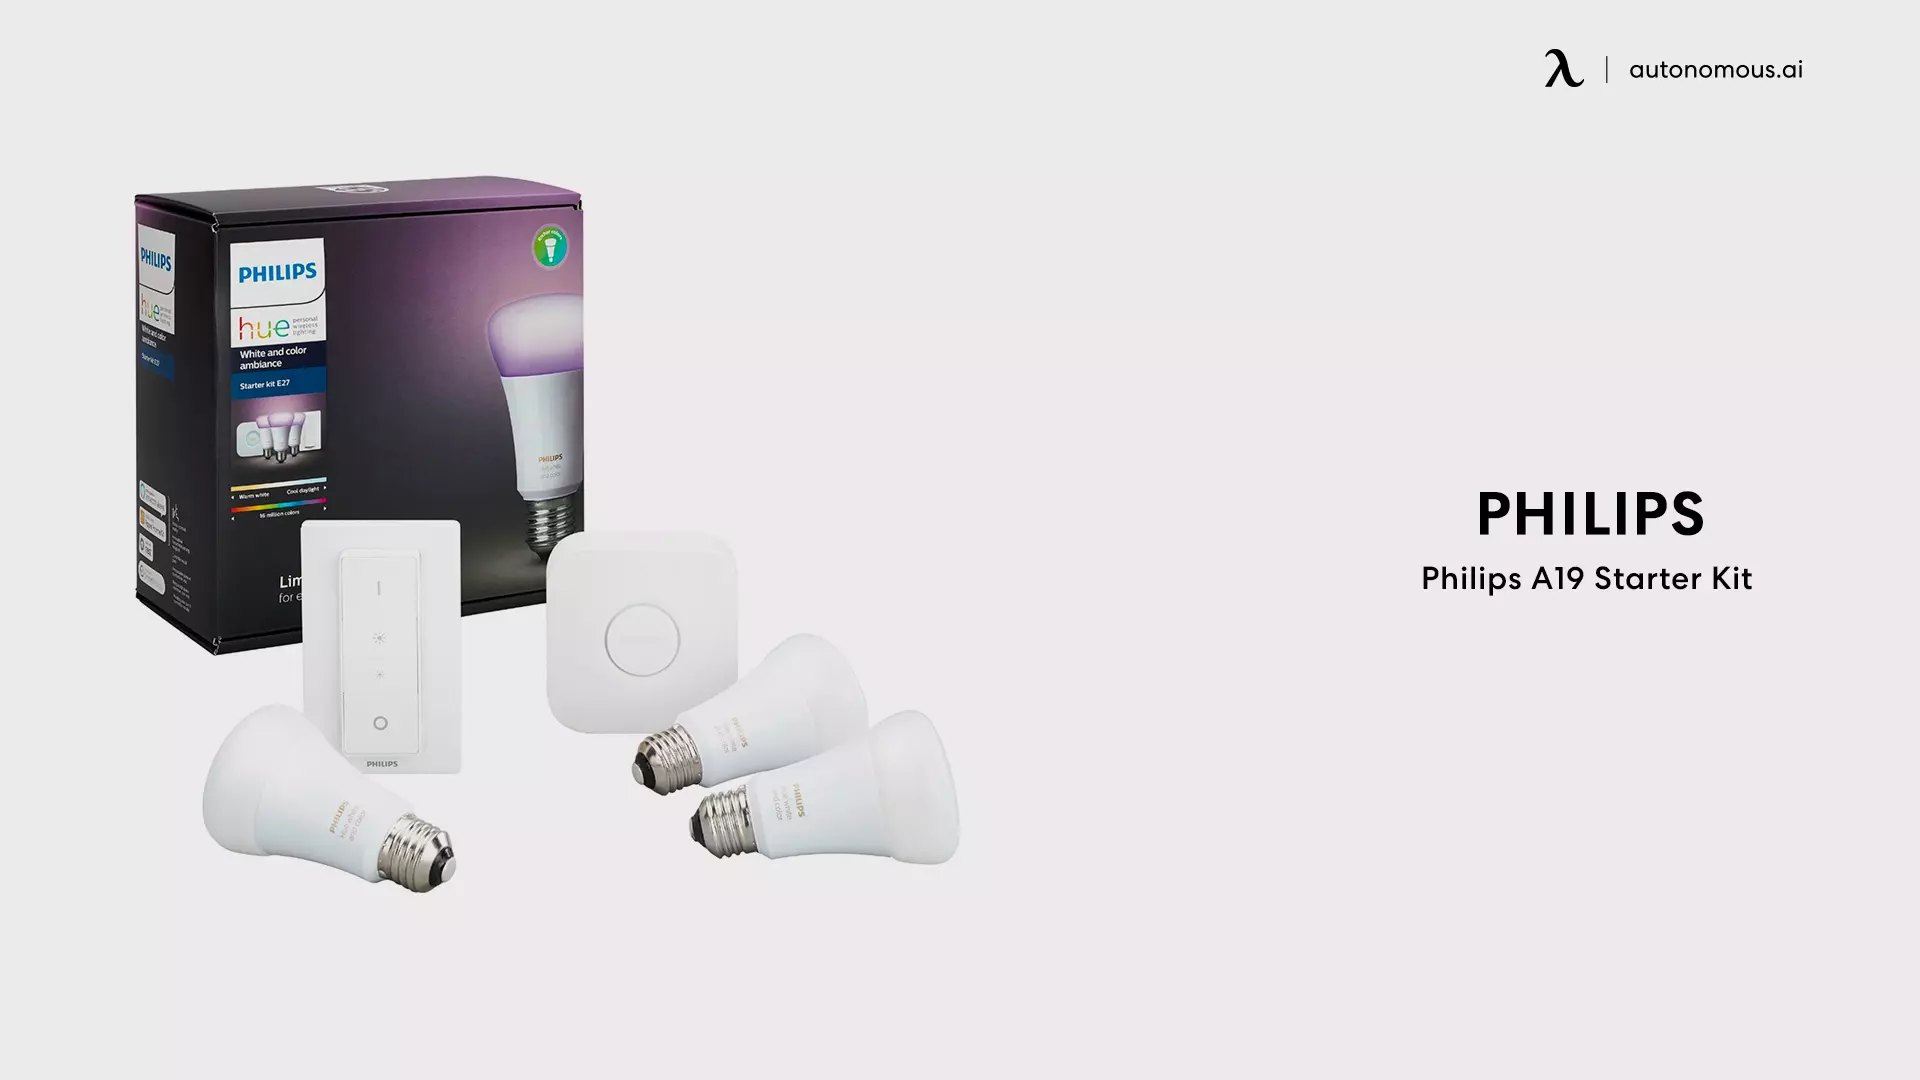 Philips A19 Starter Kit - smart home gadgets